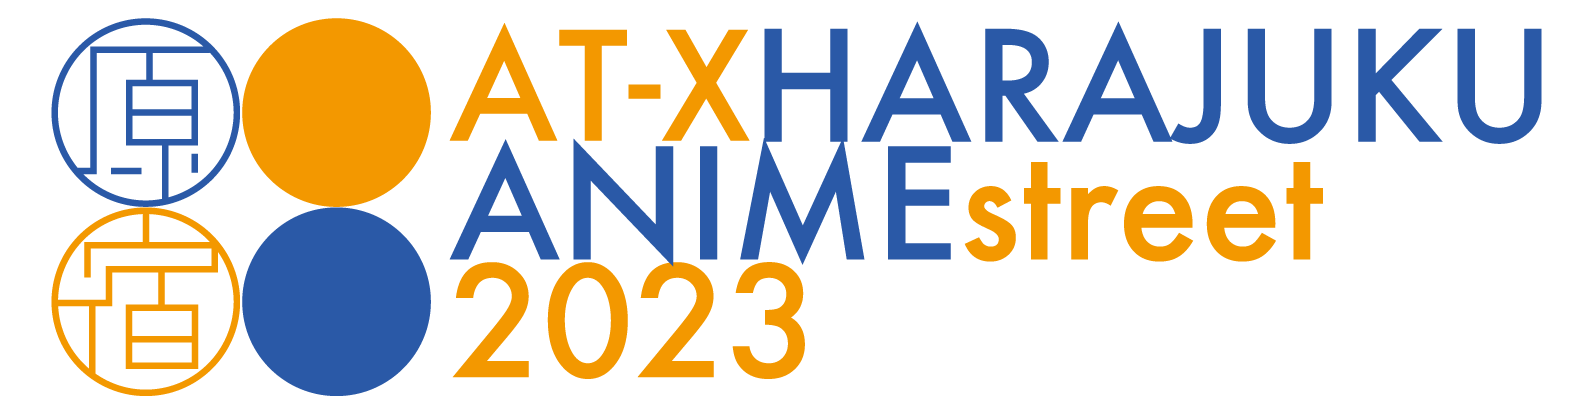 AT-X HARAJUKU ANIME street 2023 ロゴ